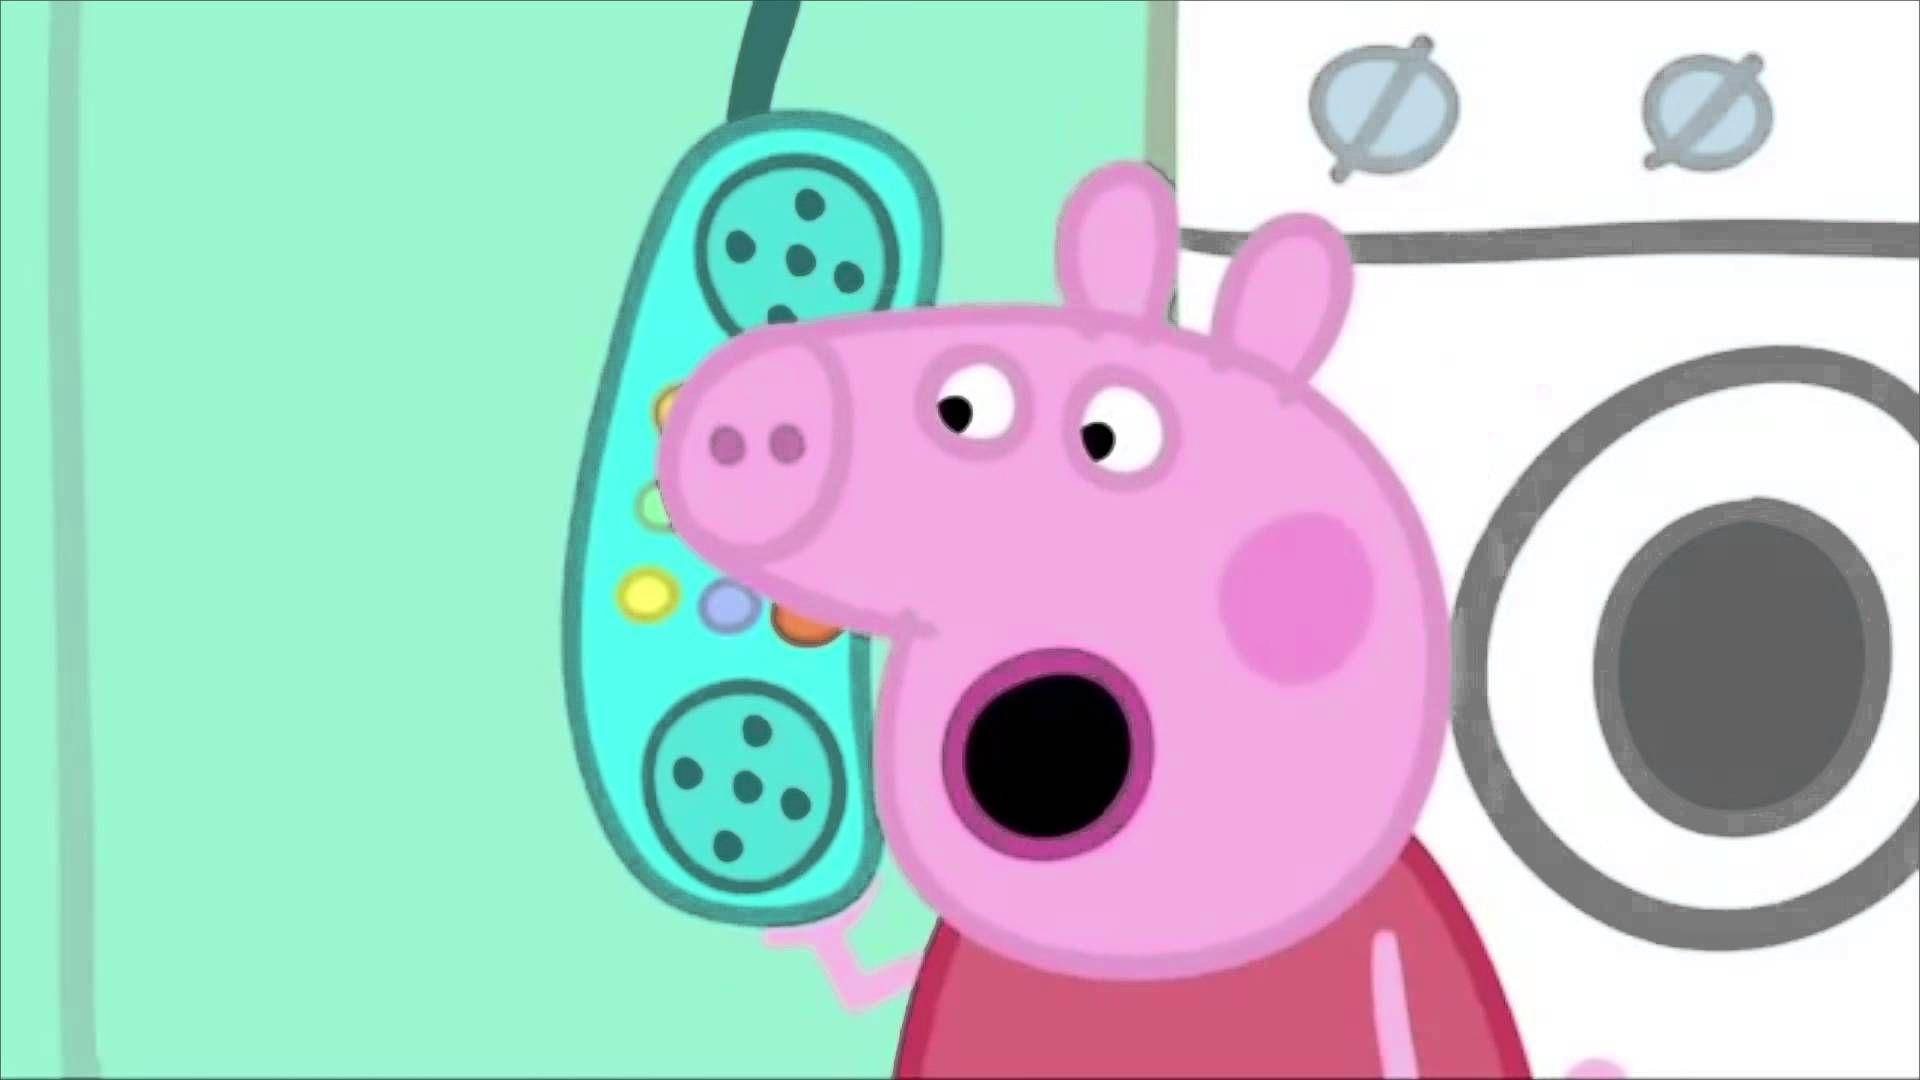 Peppa Pig Meme On The Phone Wallpaper